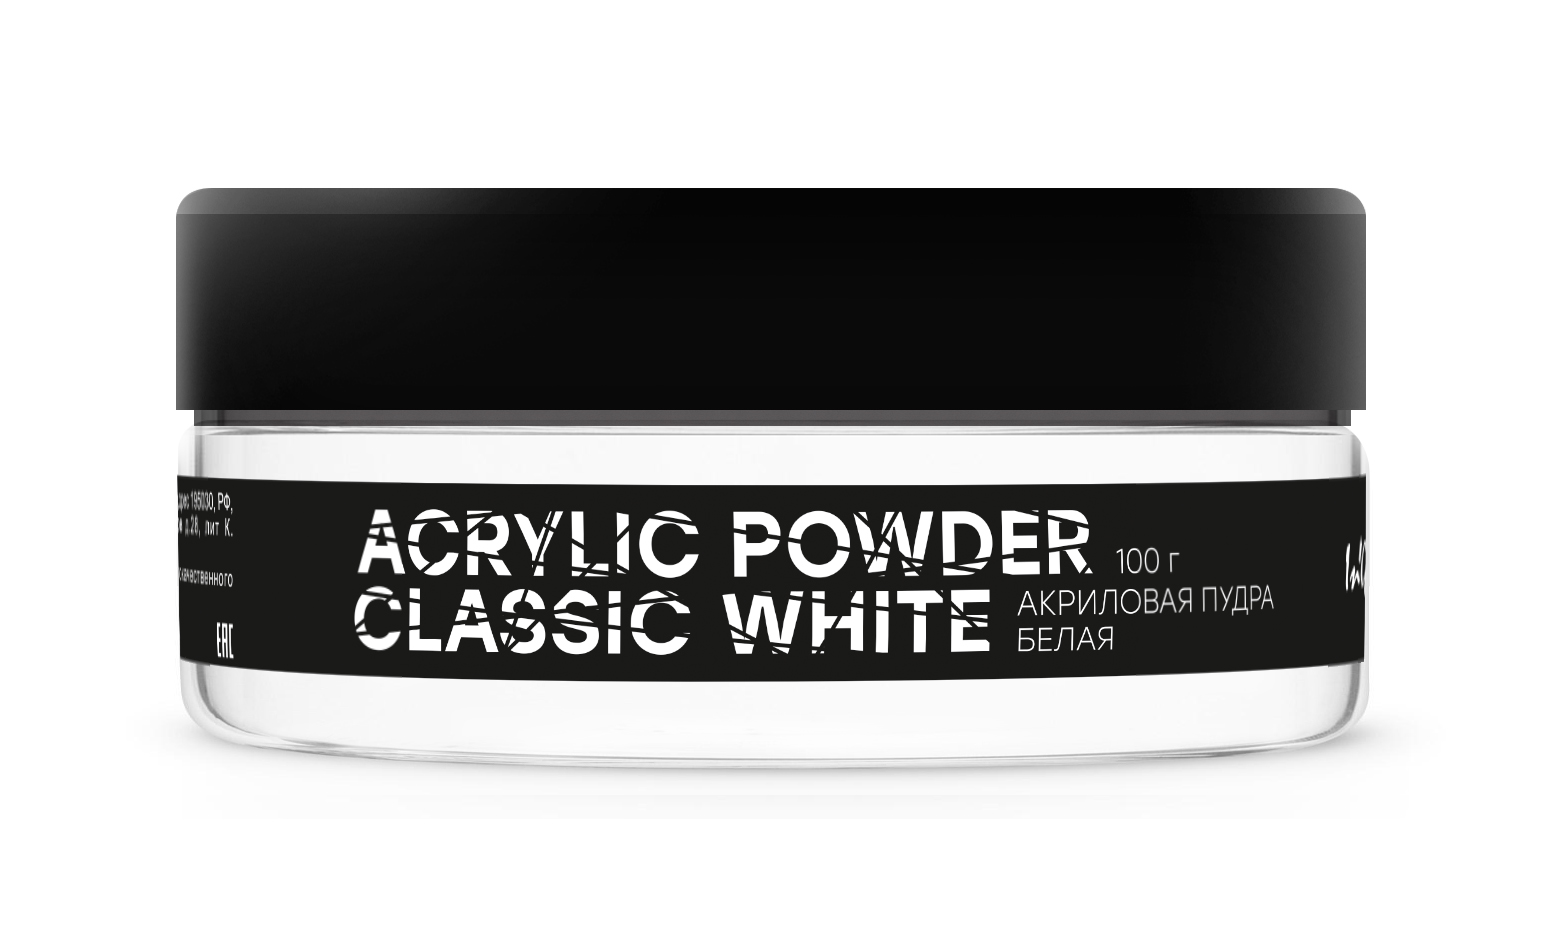 Акриловая пудра белая Acrylic Powder Classic White, 100 г ezflow акриловая ярко белая пудра truly white acrylic powder 21г